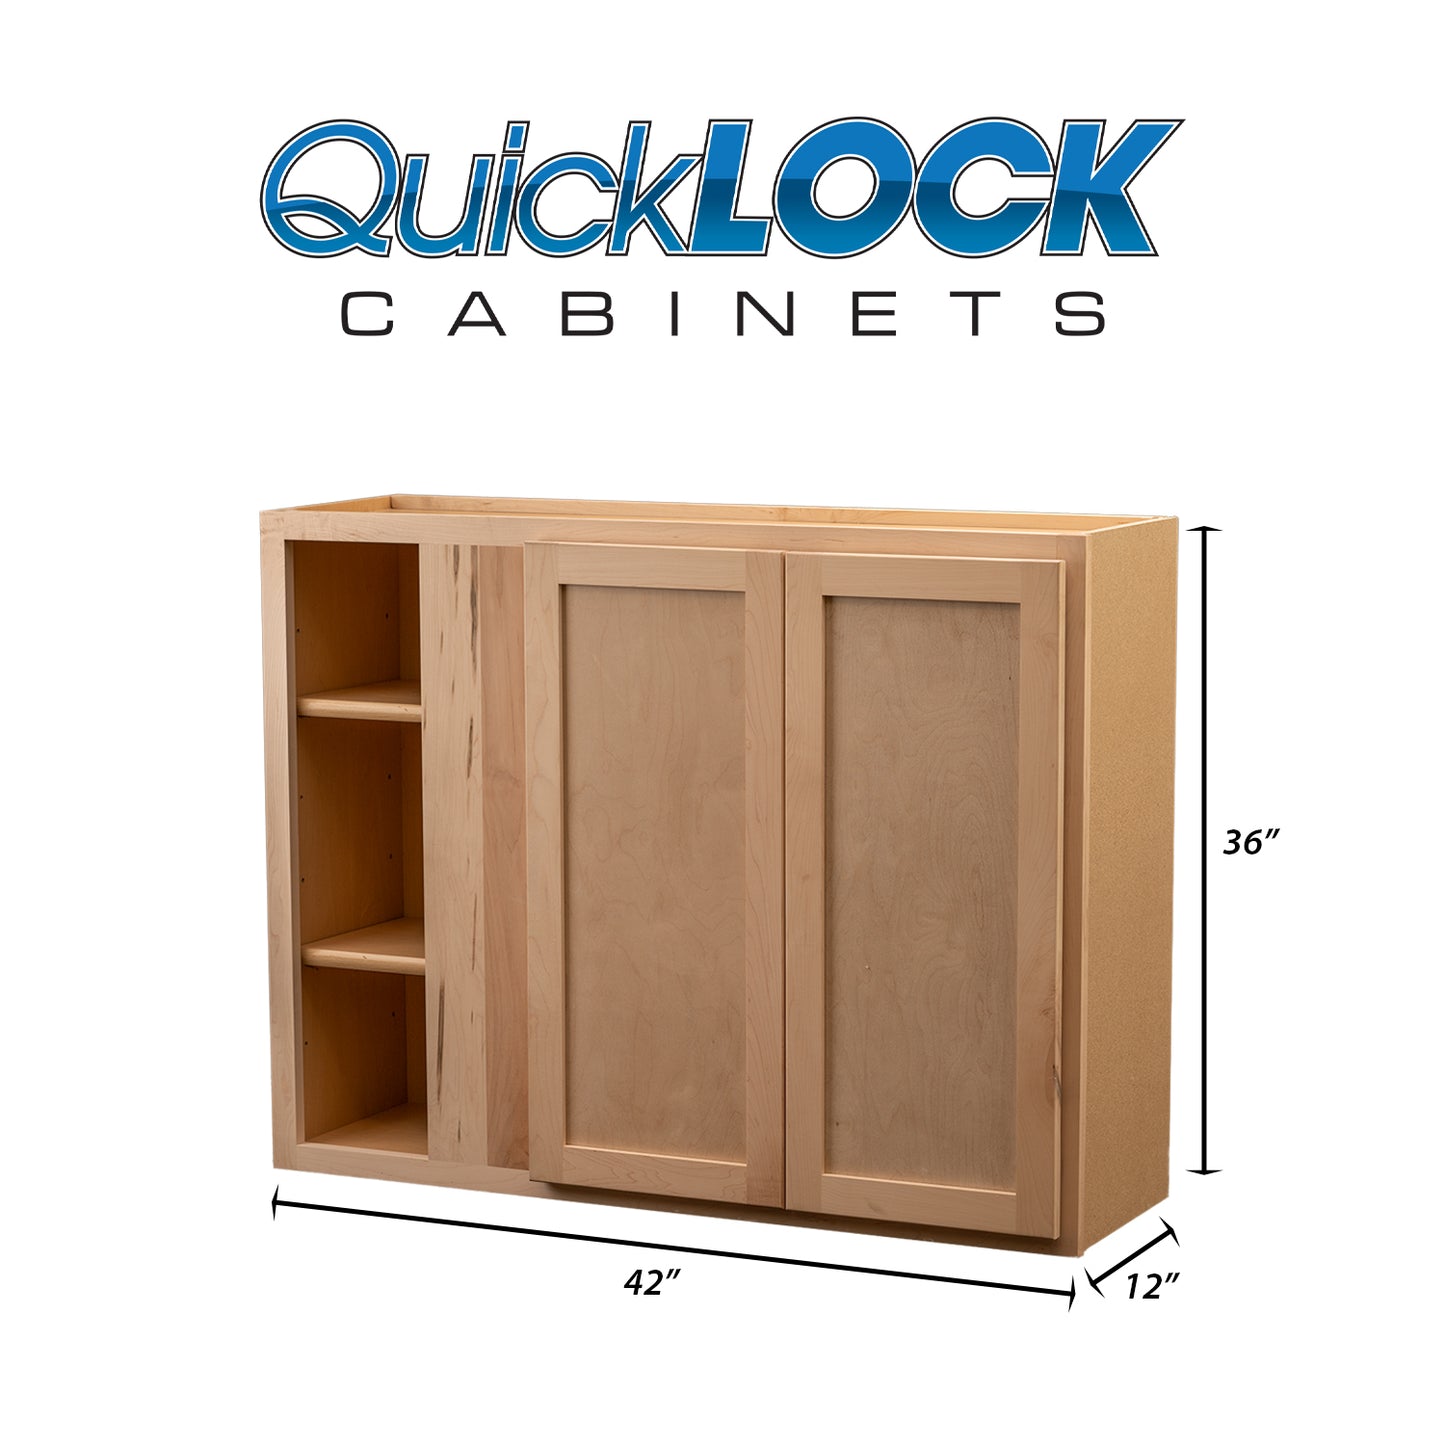 Quicklock RTA (Ready-to-Assemble) Raw Maple 42"Wx36"Hx12"D Blind Corner Wall Cabinet